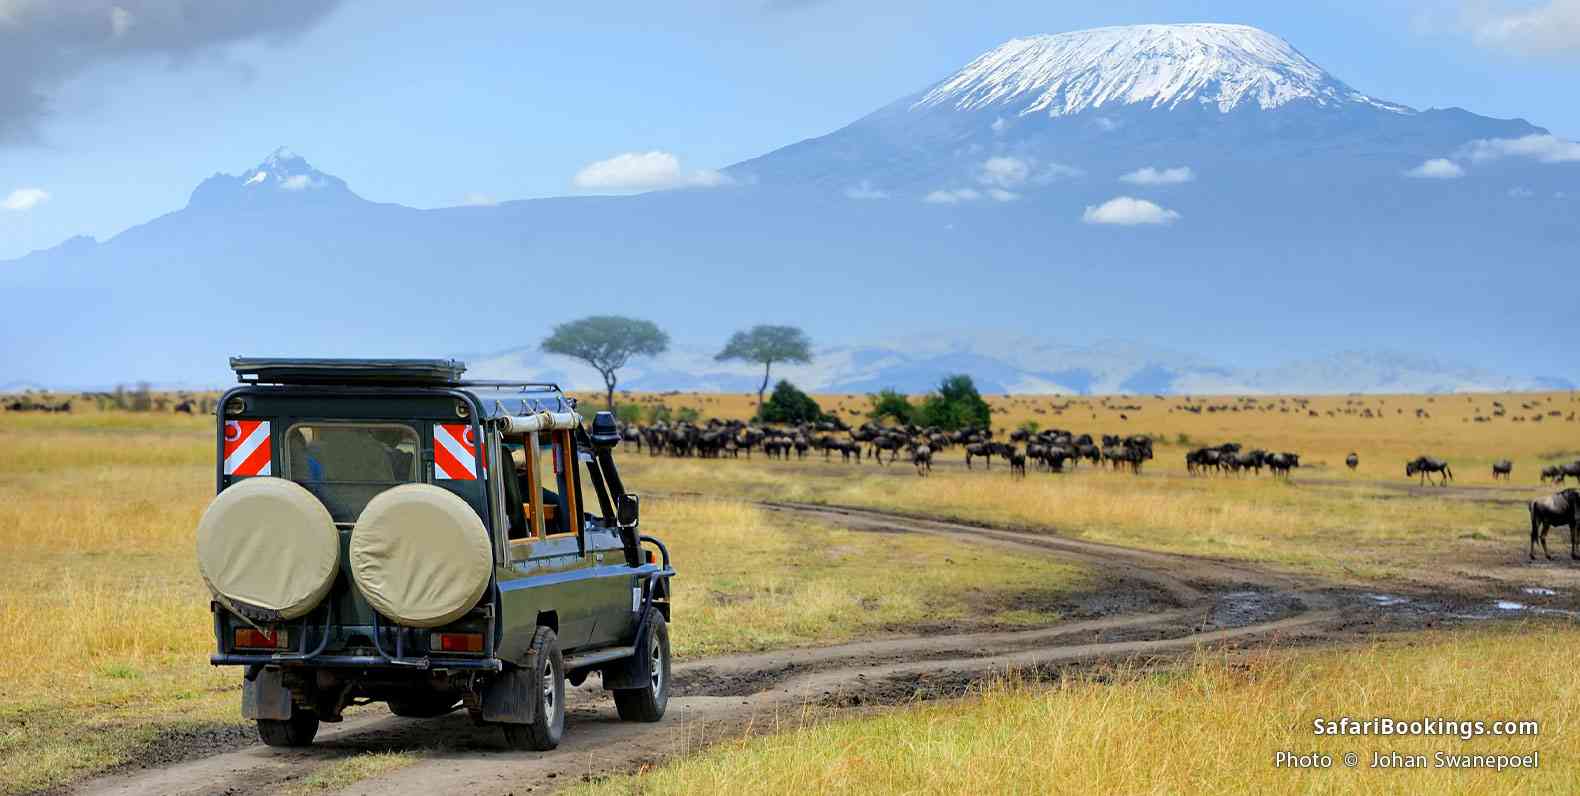 Tourist vehicle in front of Mount Kilimanjaro